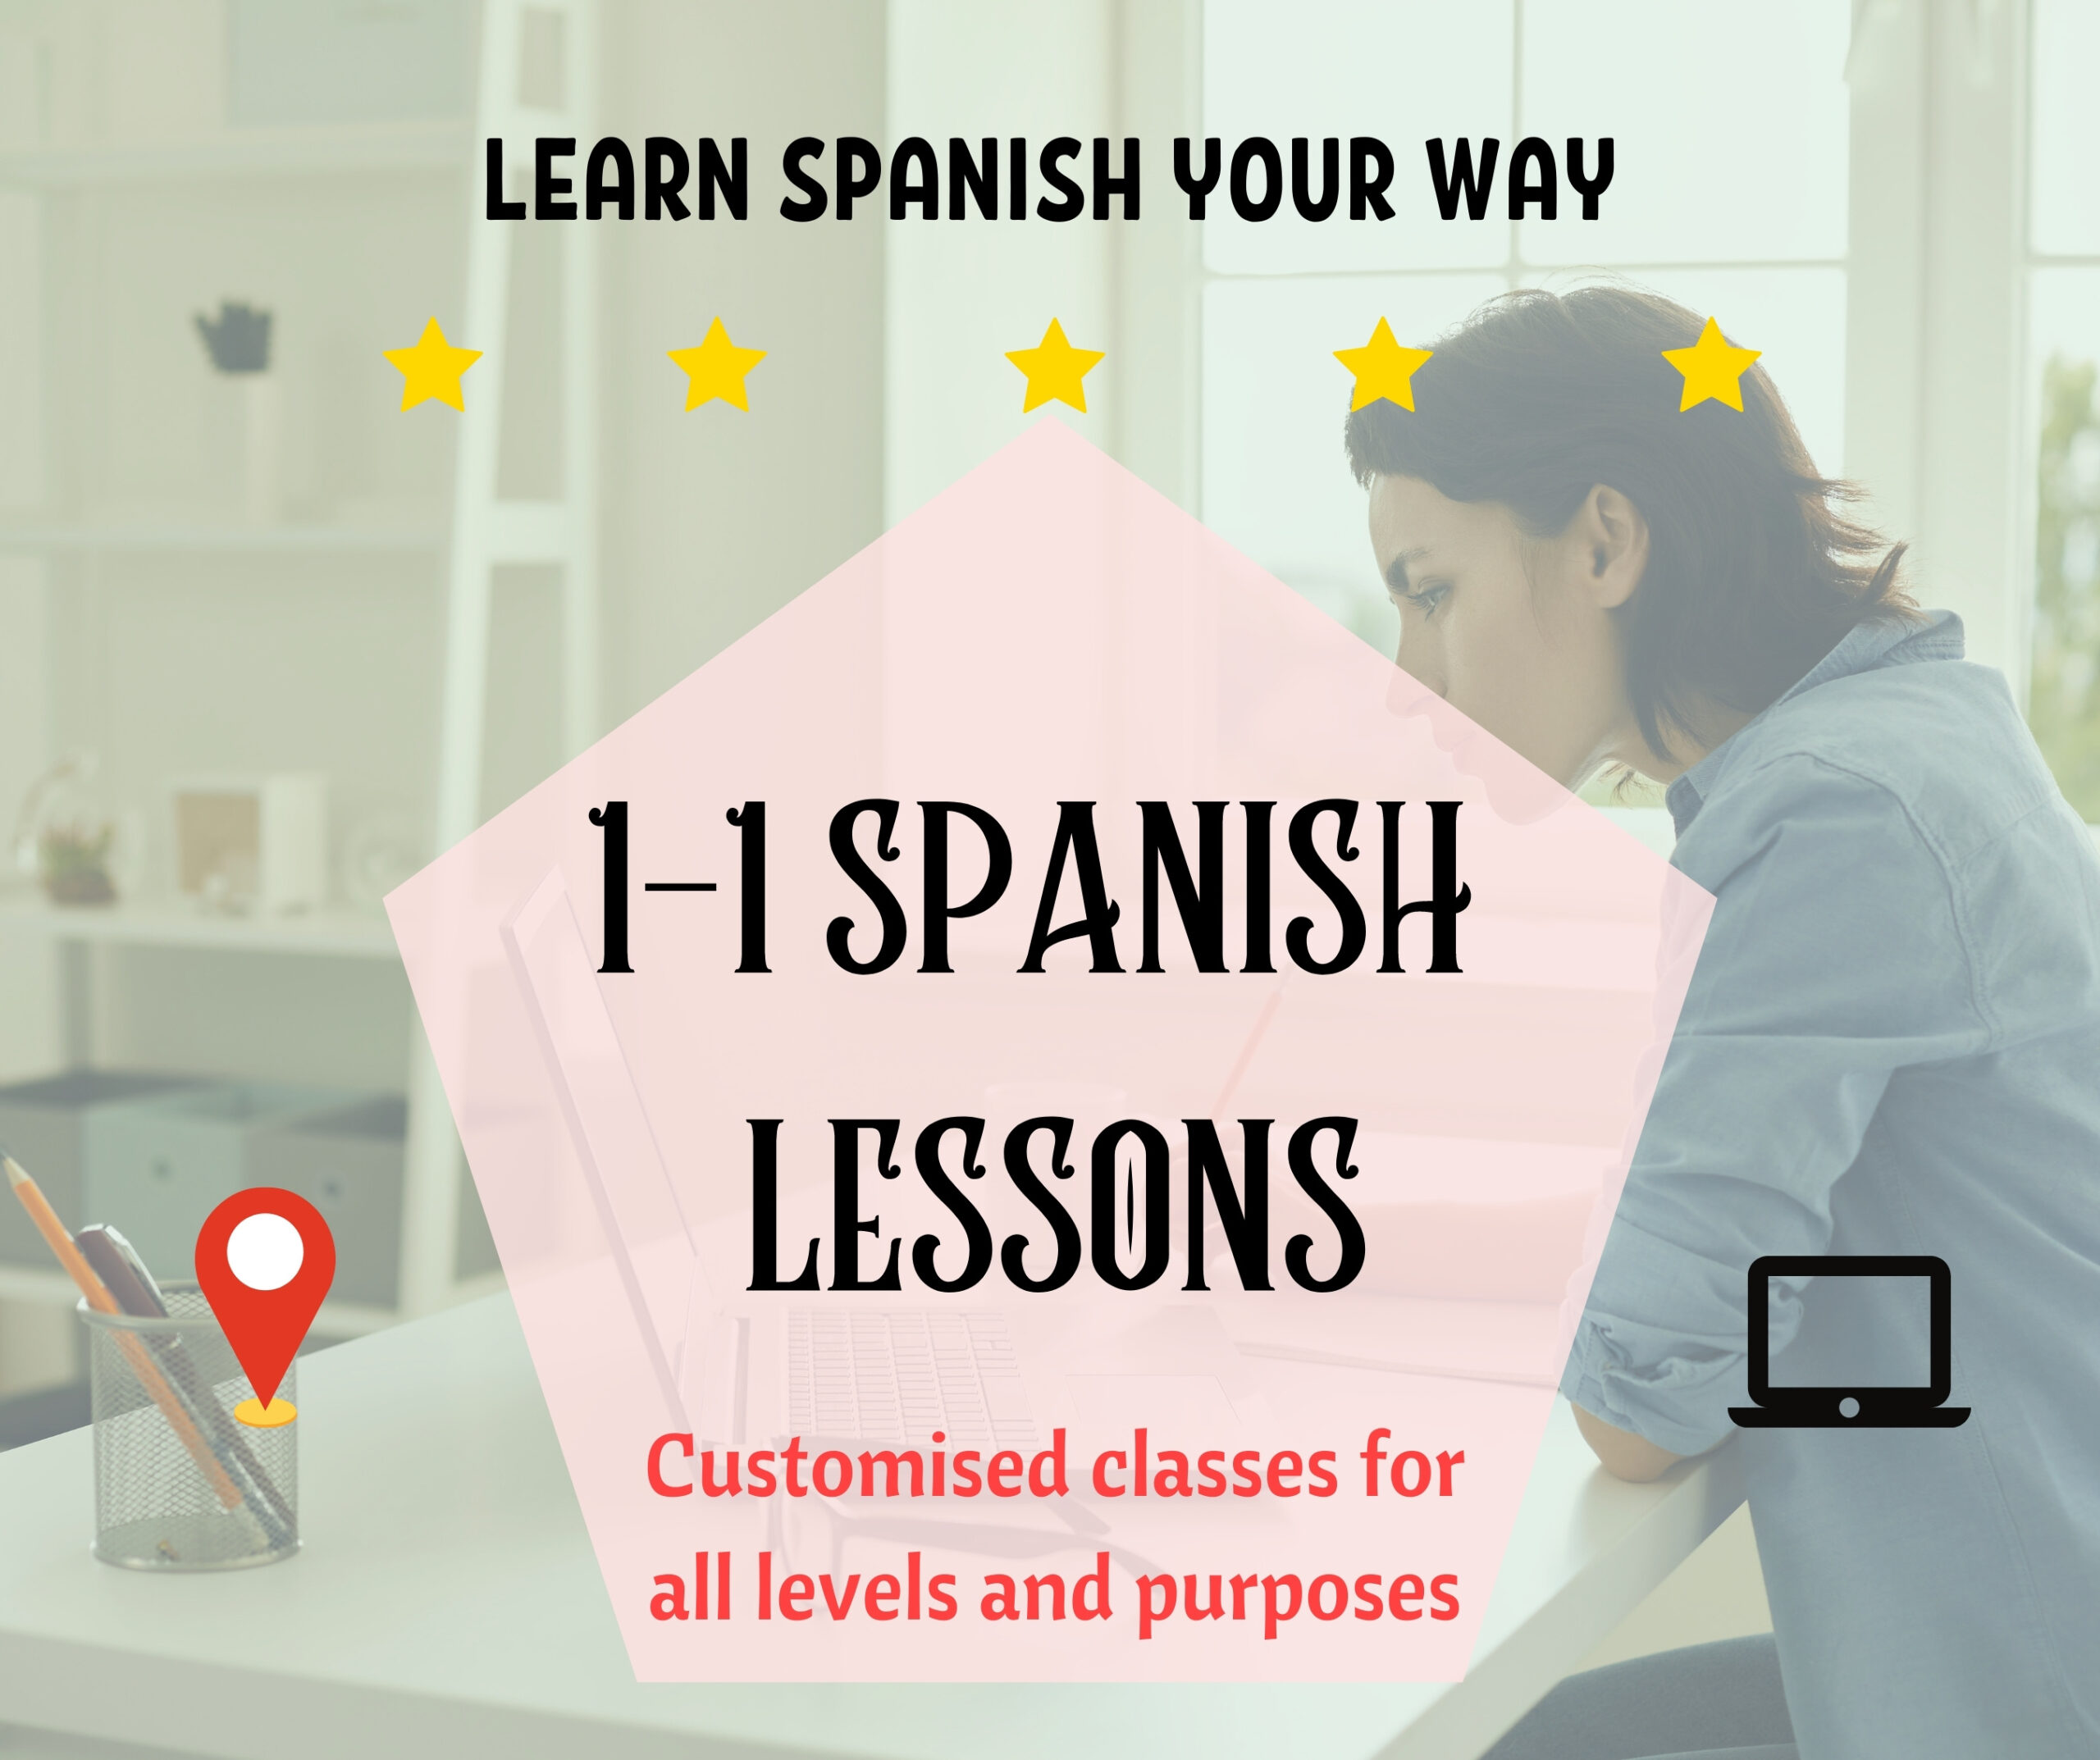 1-1 Spanish lessons